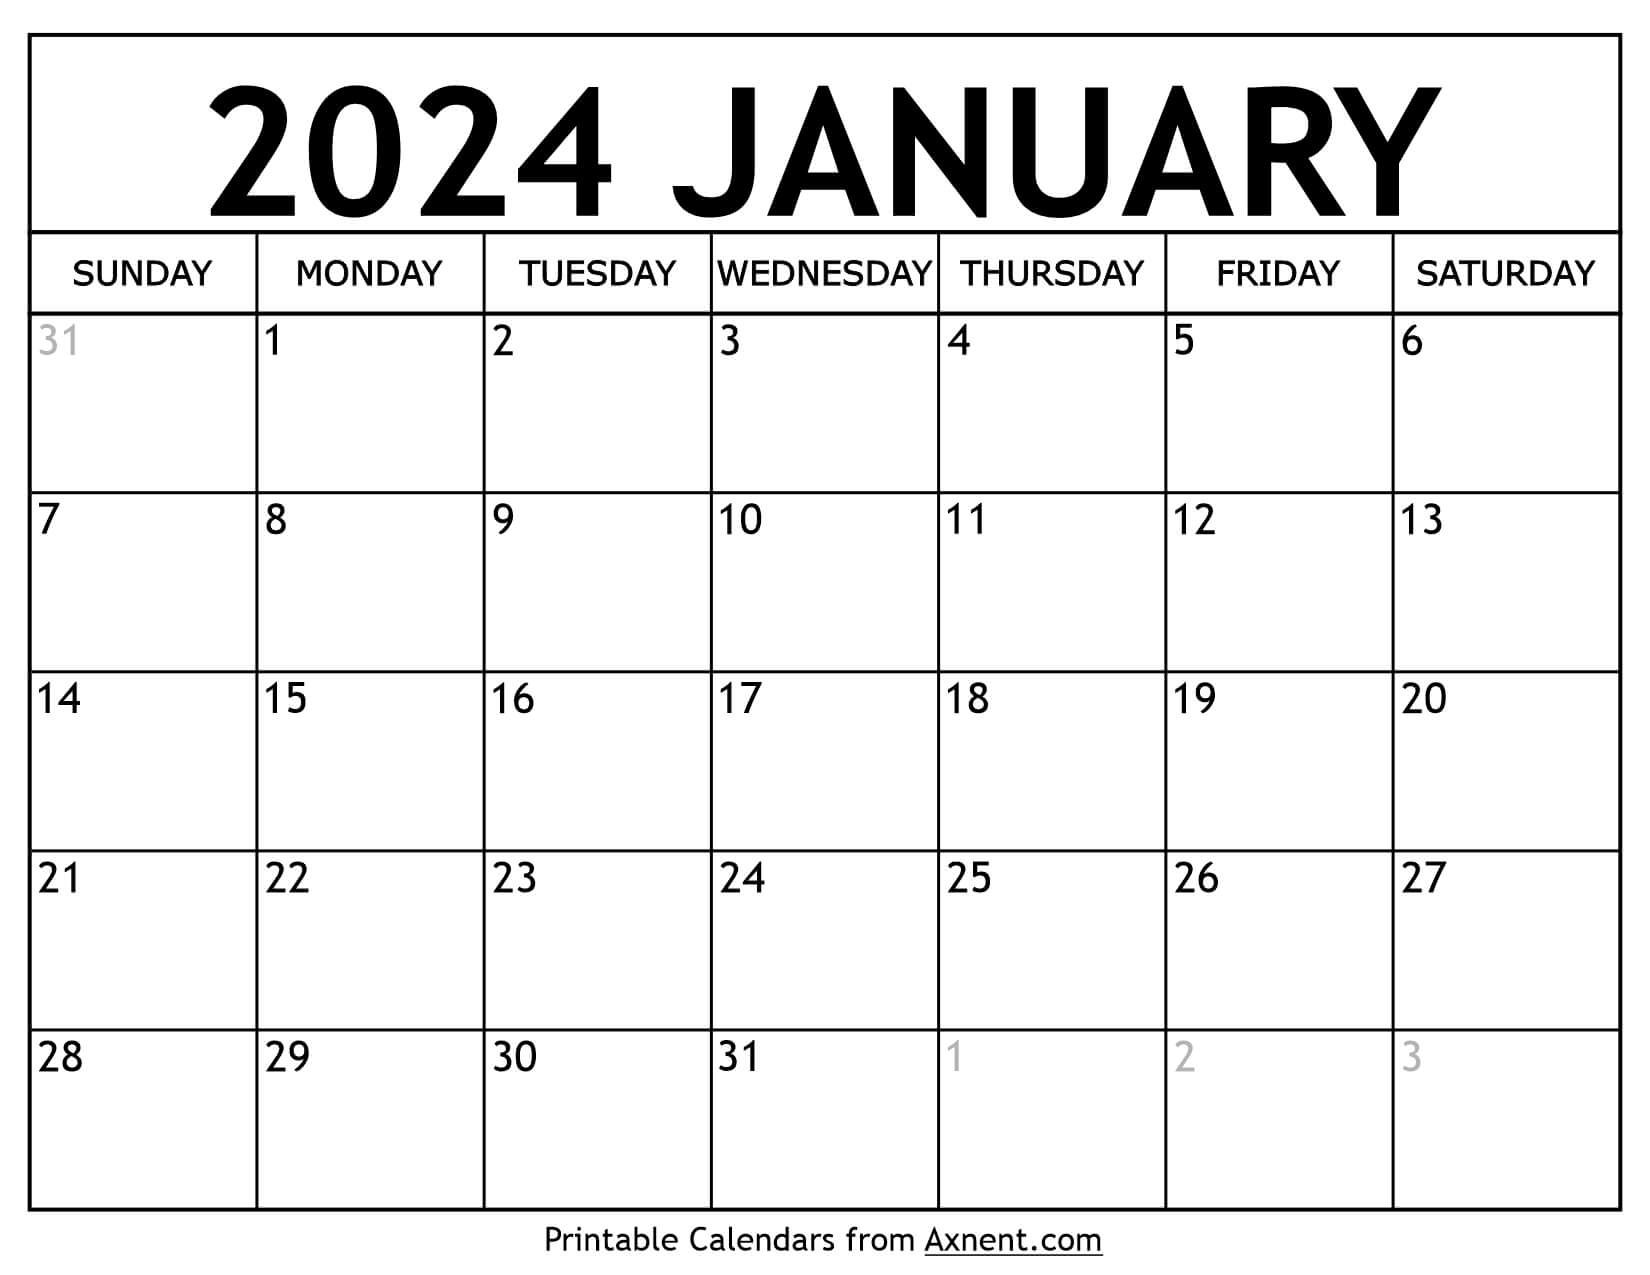 Printable January 2024 Calendar Template - Print Now for Free Printable Monthly January 2024 Calendar